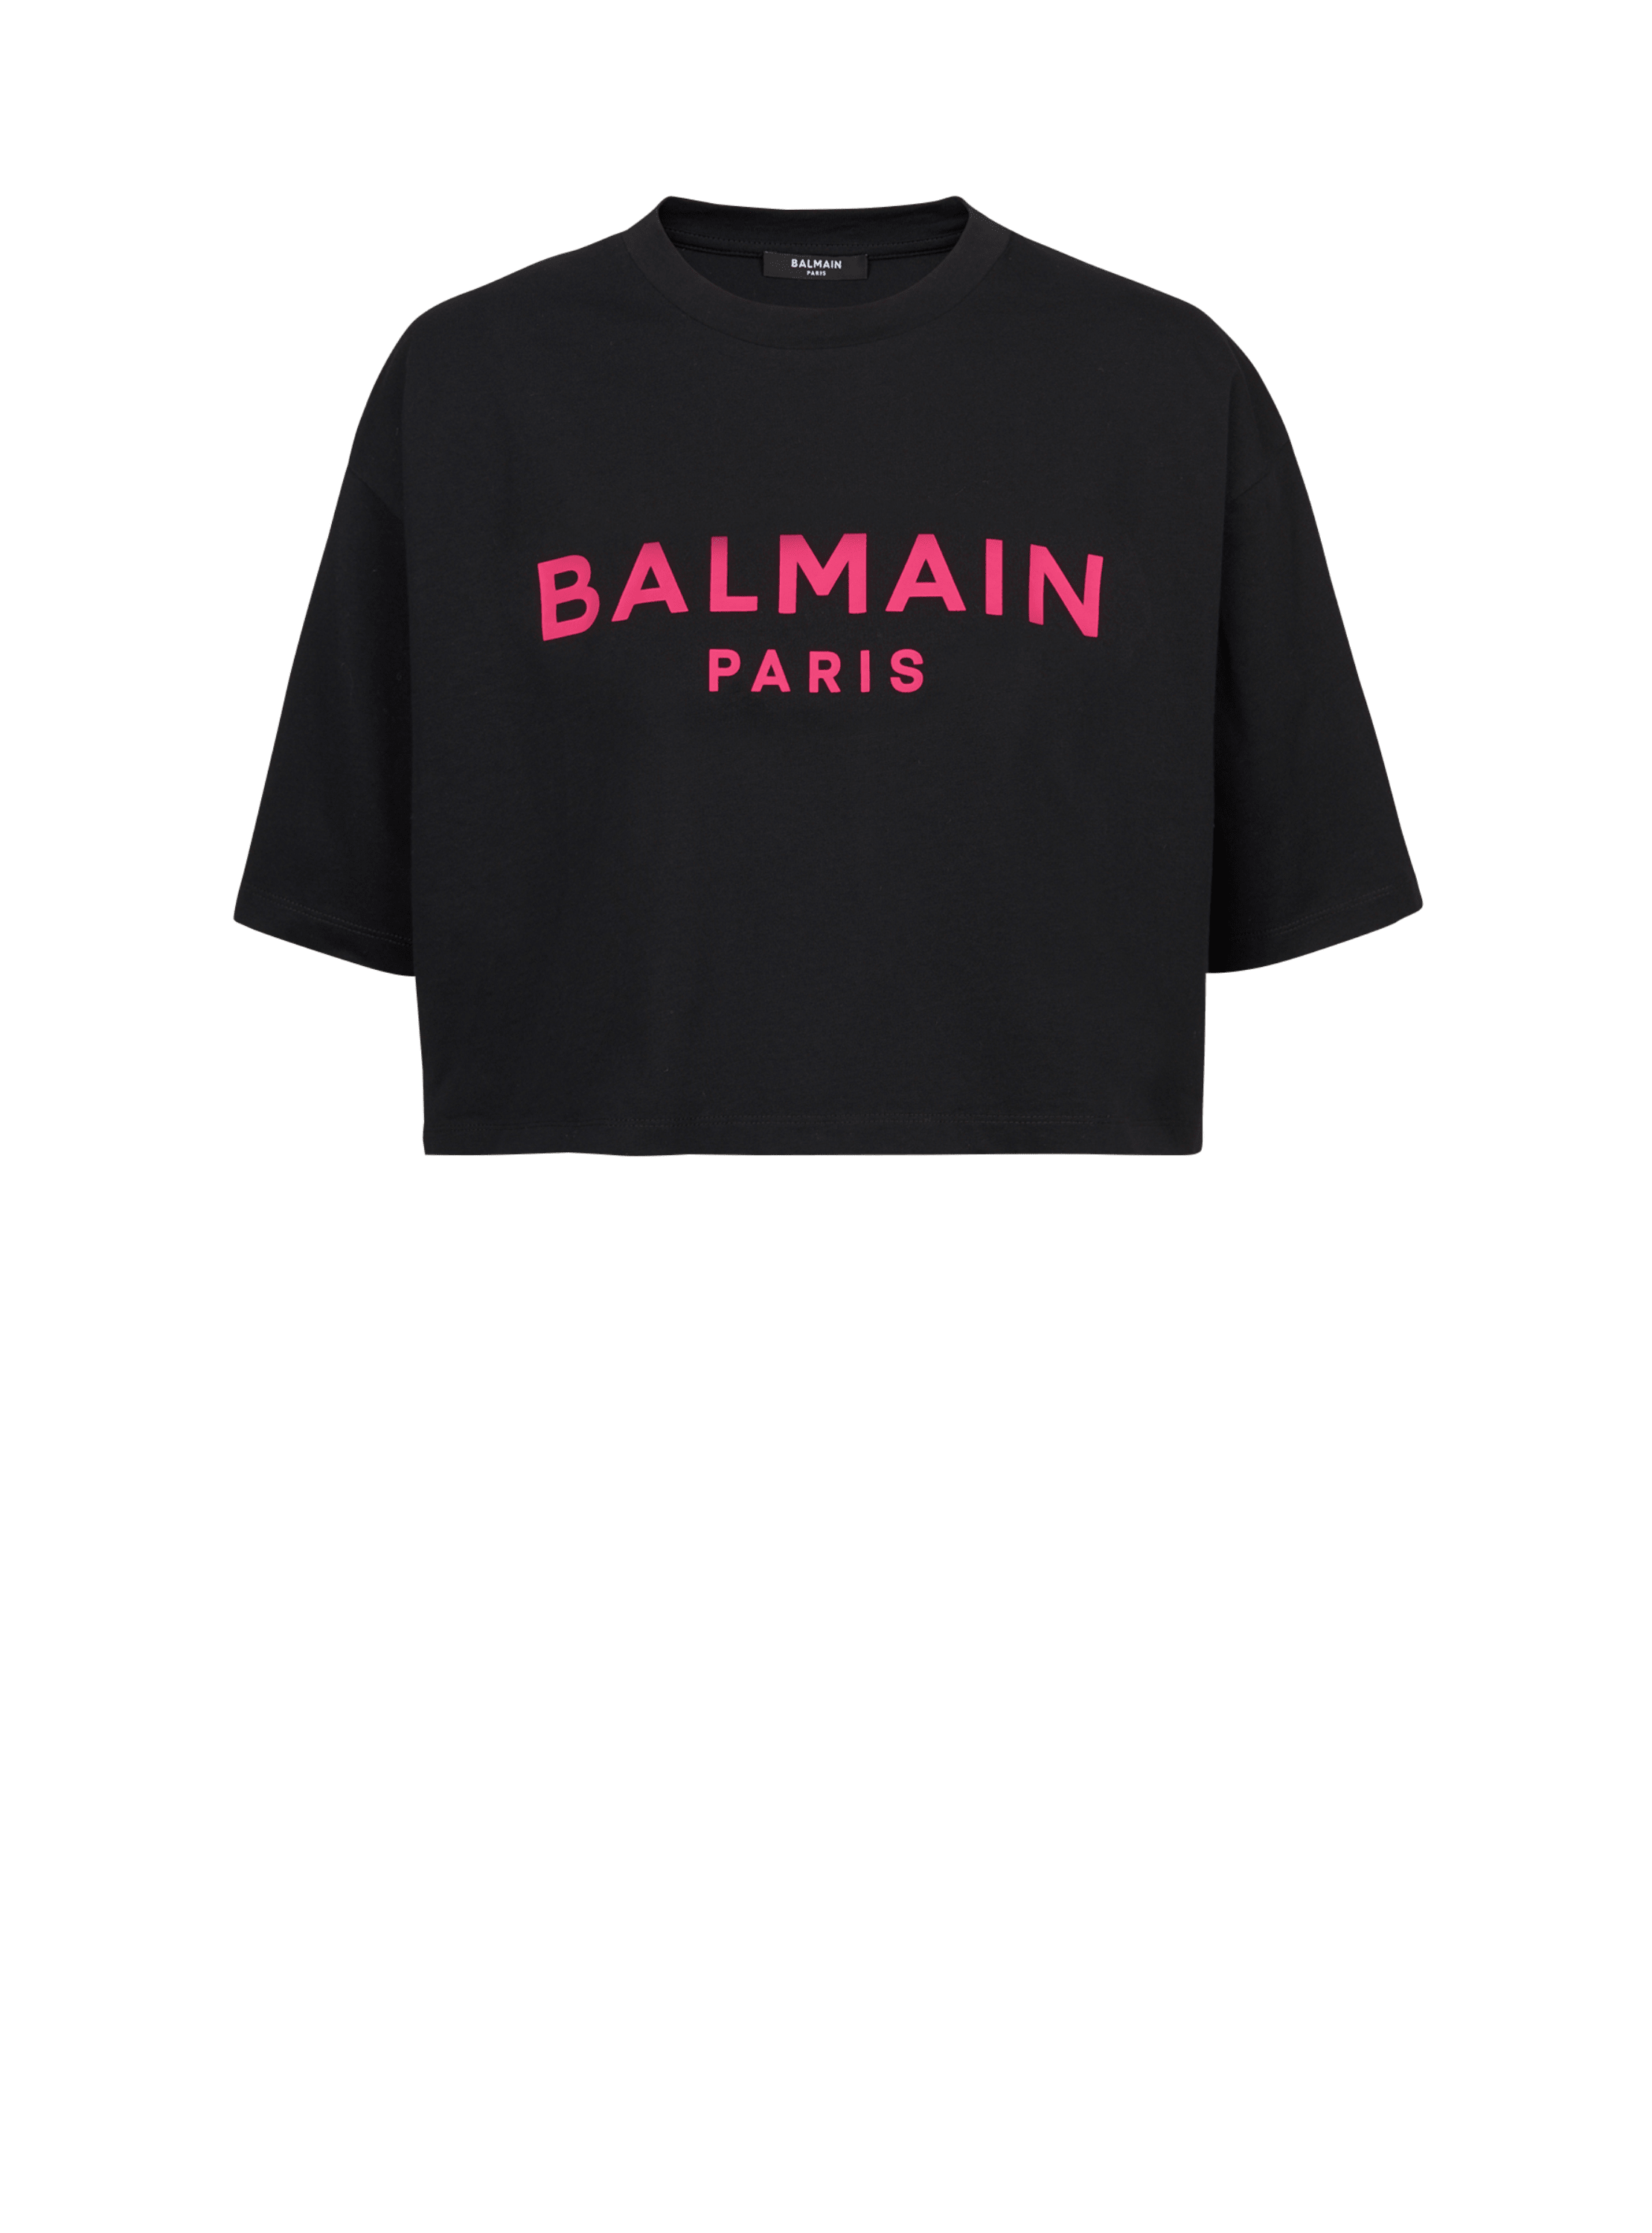 T-shirt corta in cotone con logo Balmain, rosa, hi-res